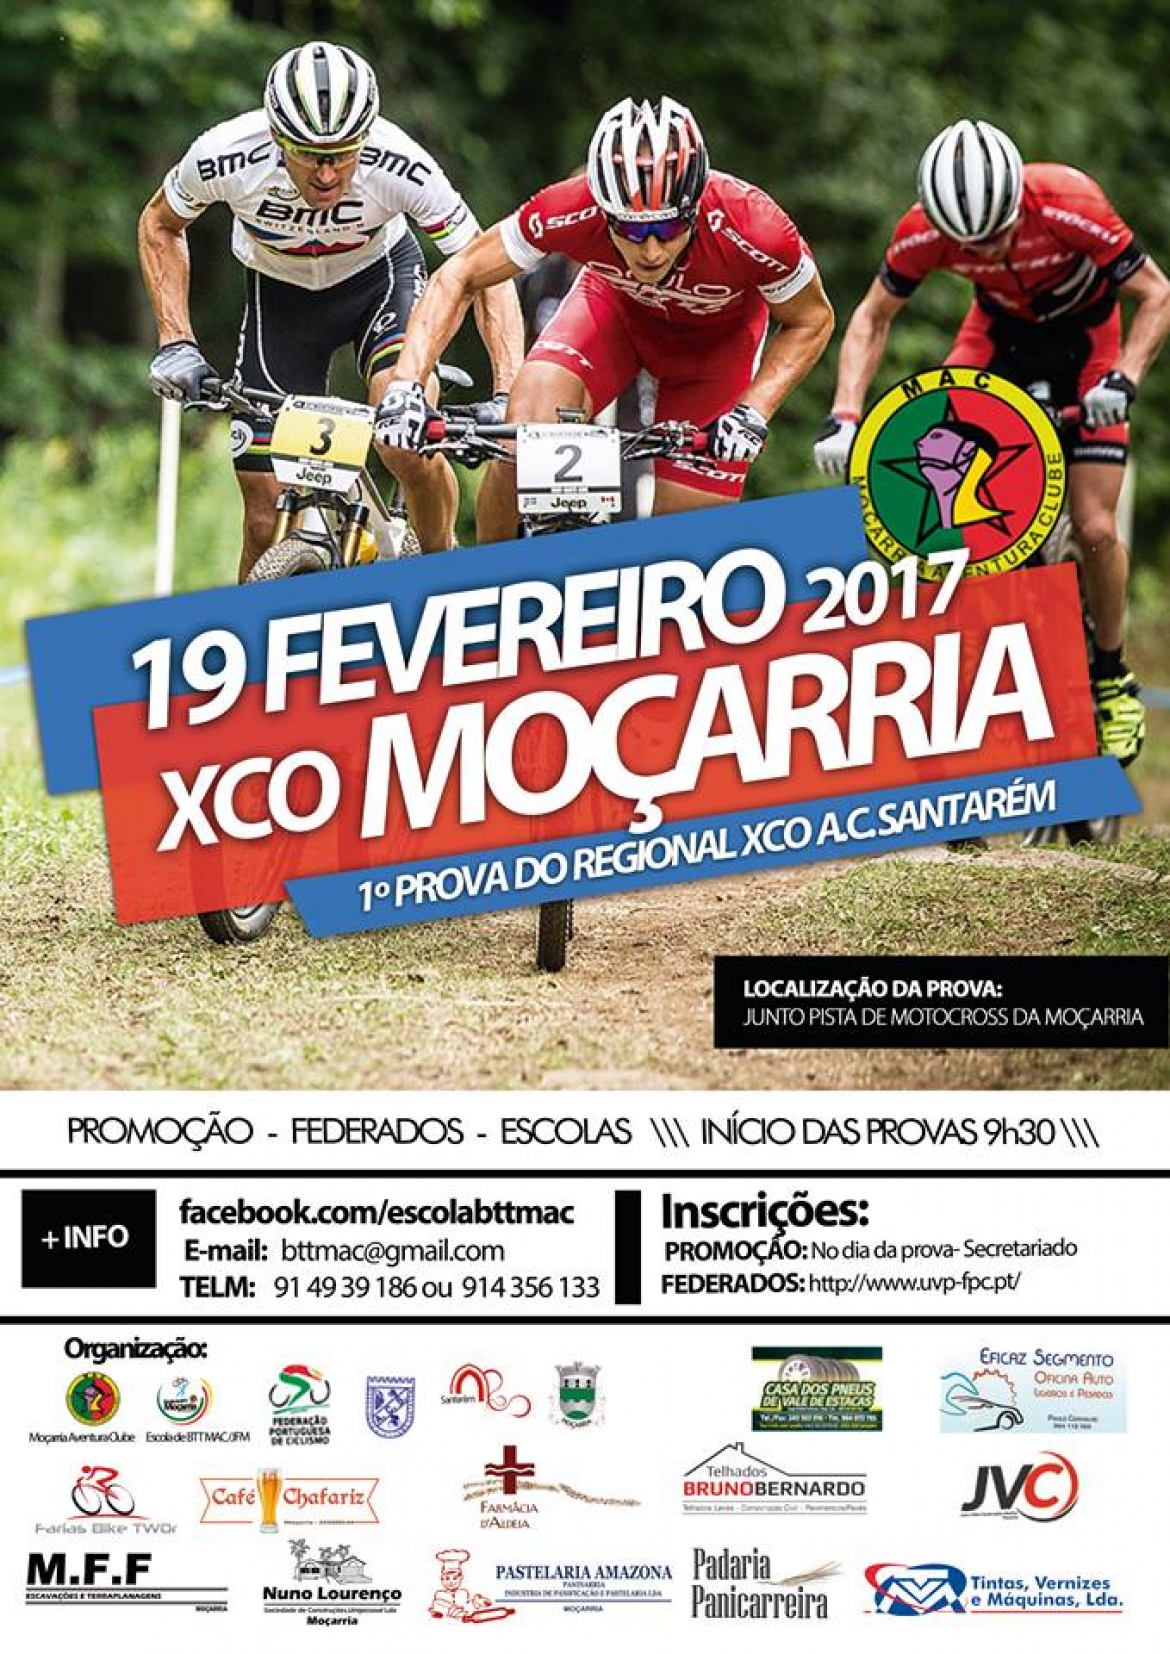 1º Prova Regional XCO A.C. Santarém